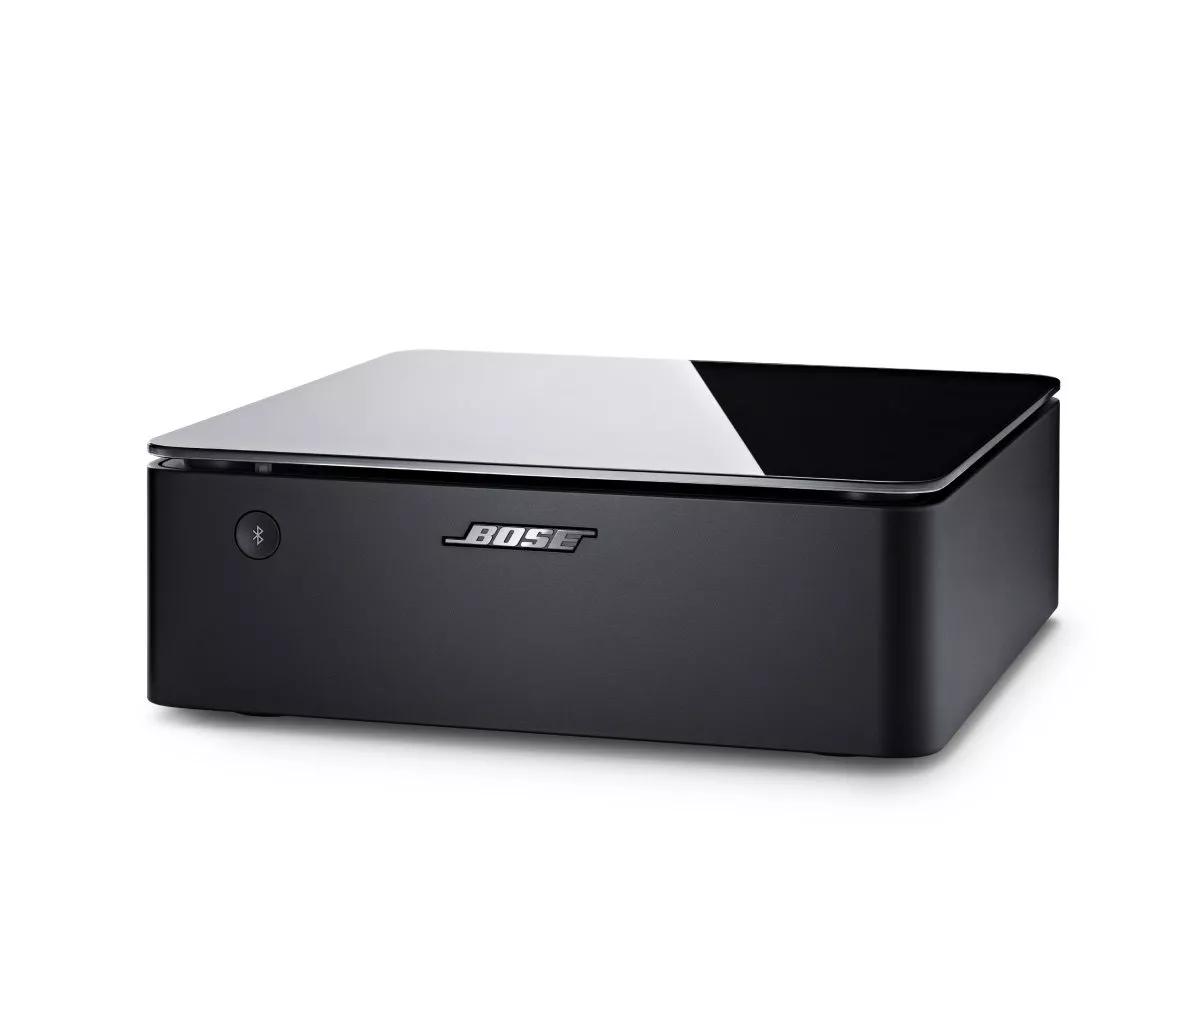 Bose Music Amplifier | Bose Support